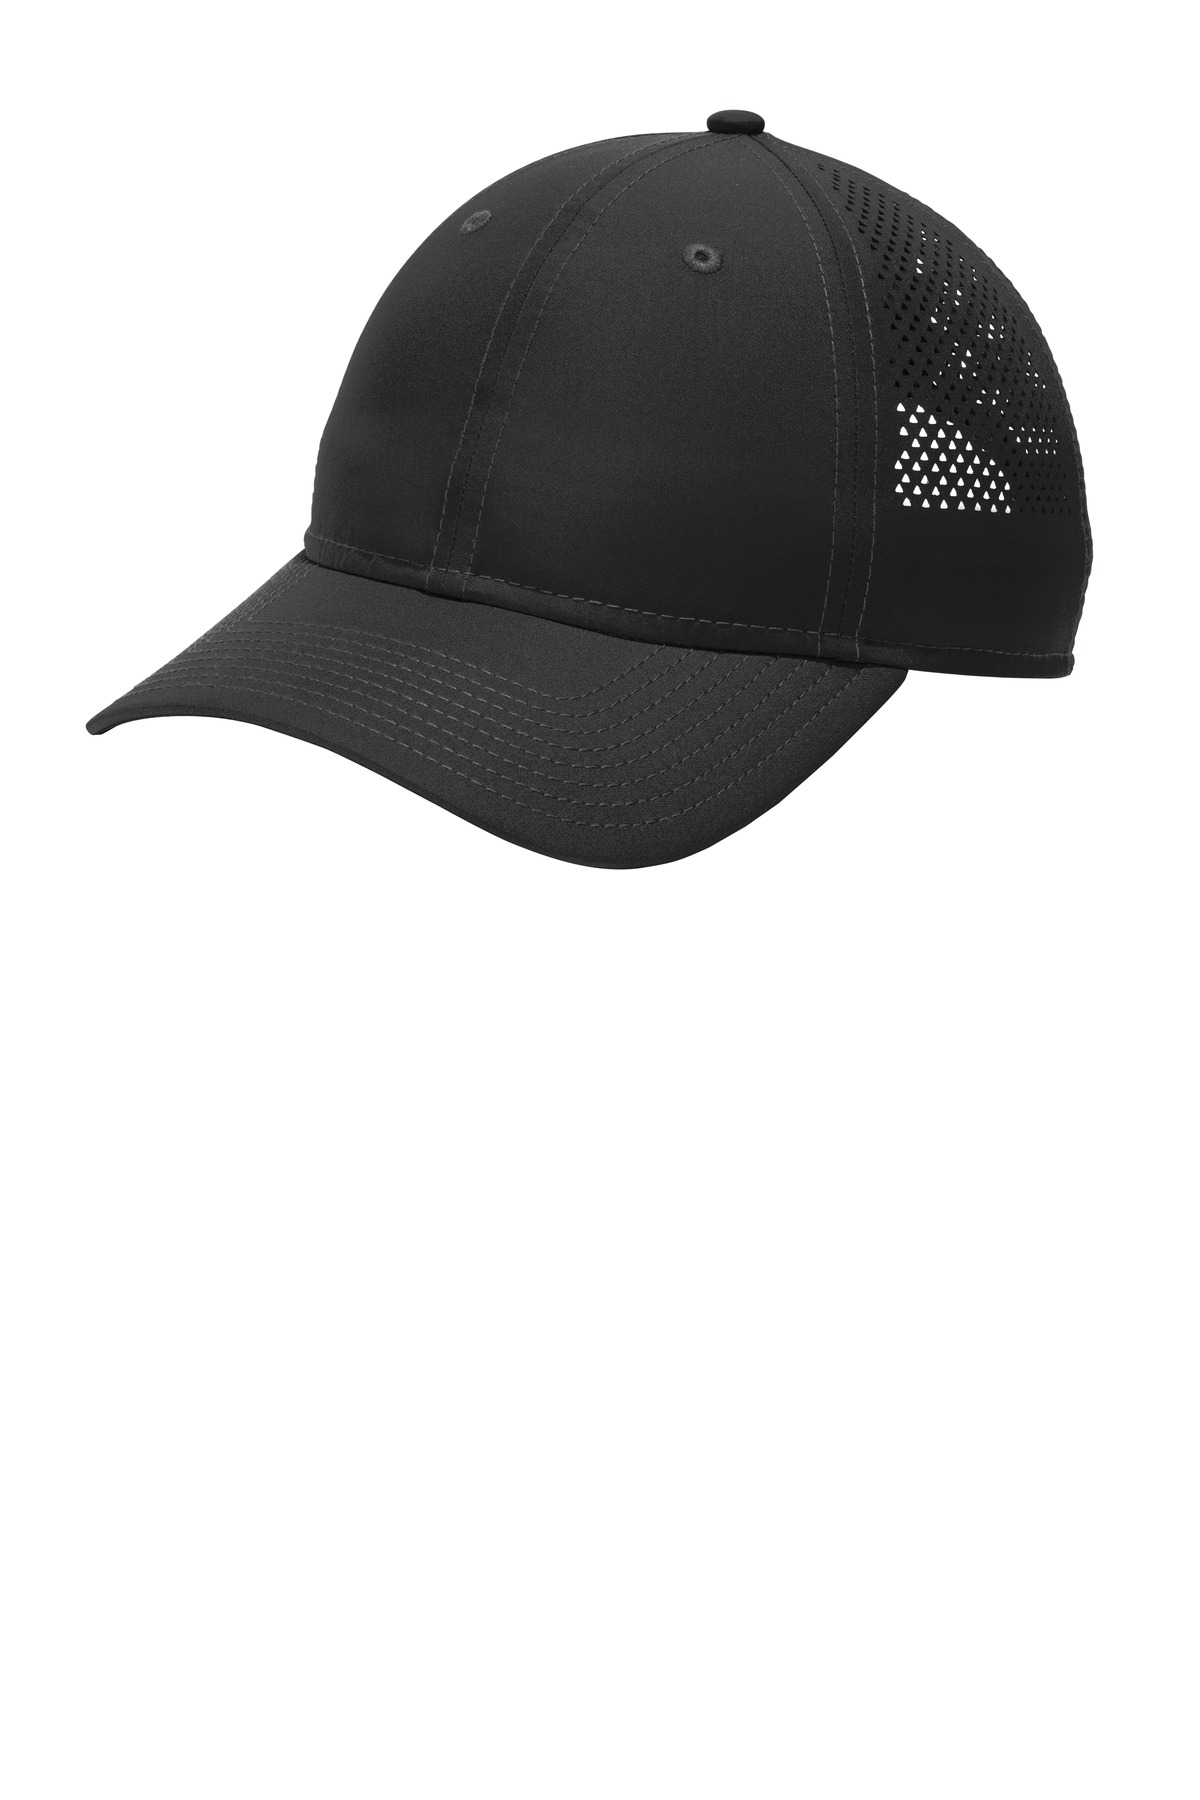 New Era Hospitality Caps ® Perforated Performance Cap.-New Era